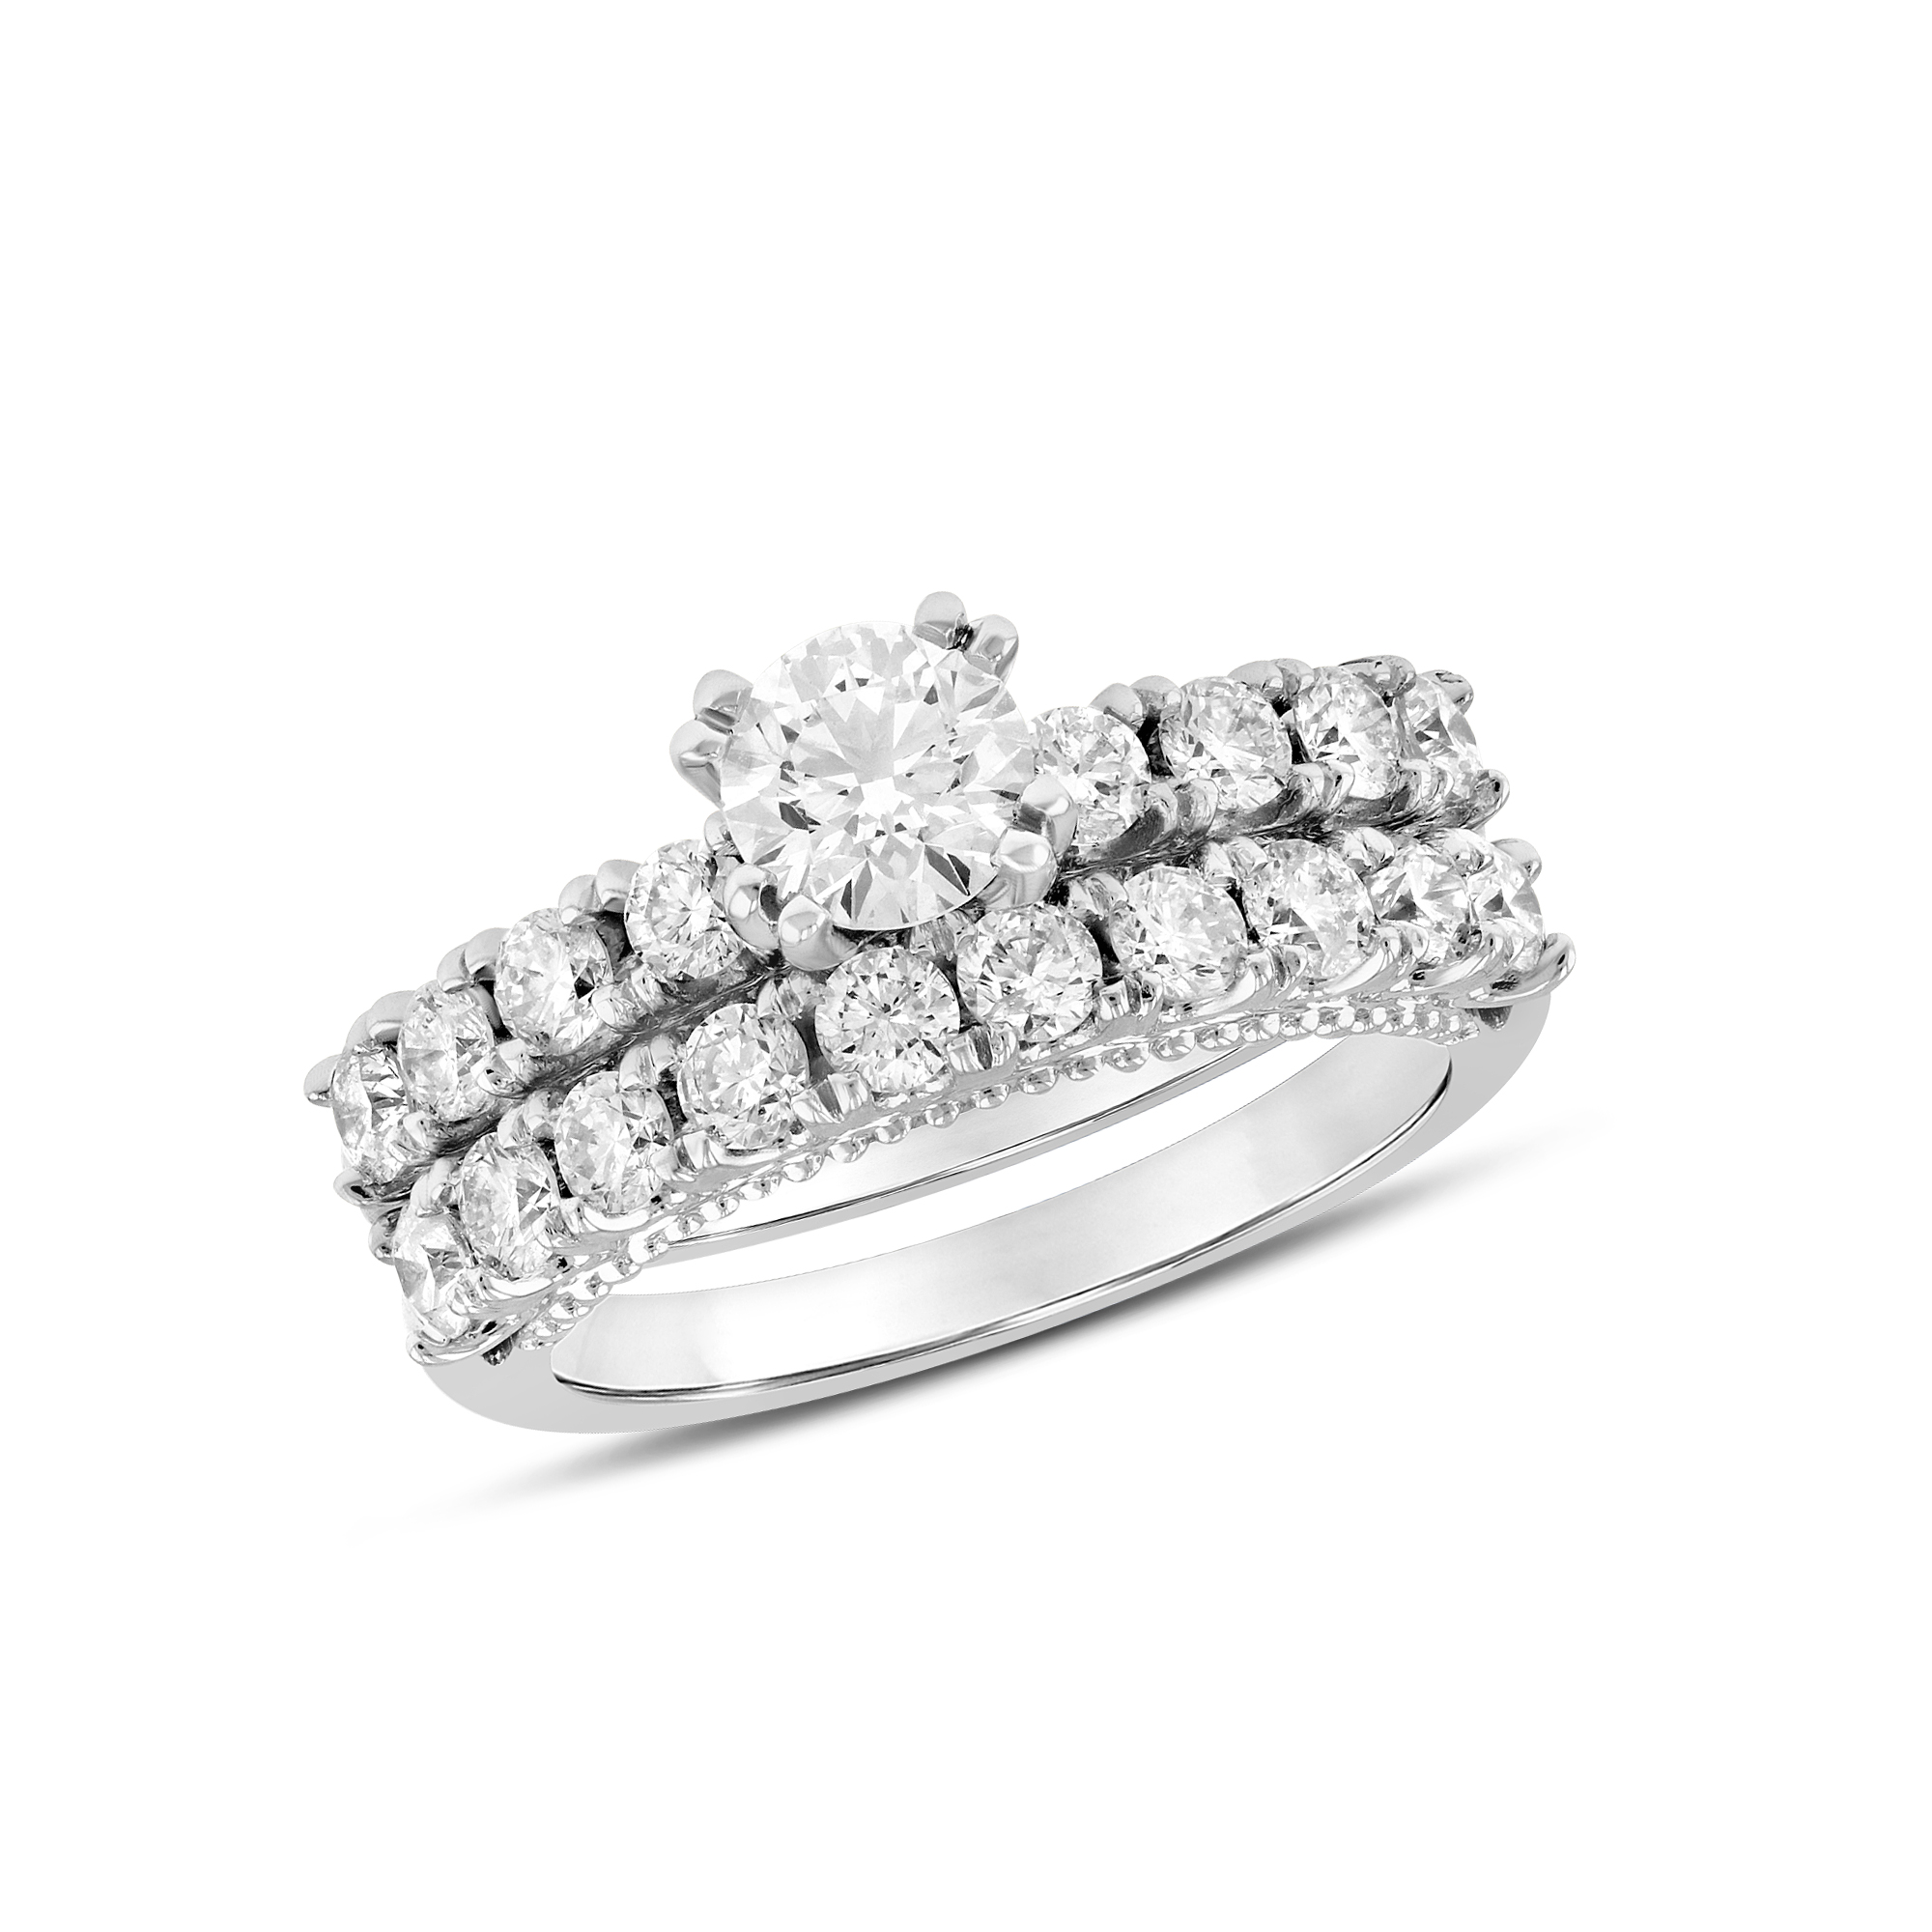 1.95ctw Diamond Engagement Ring Set in 14k White Gold